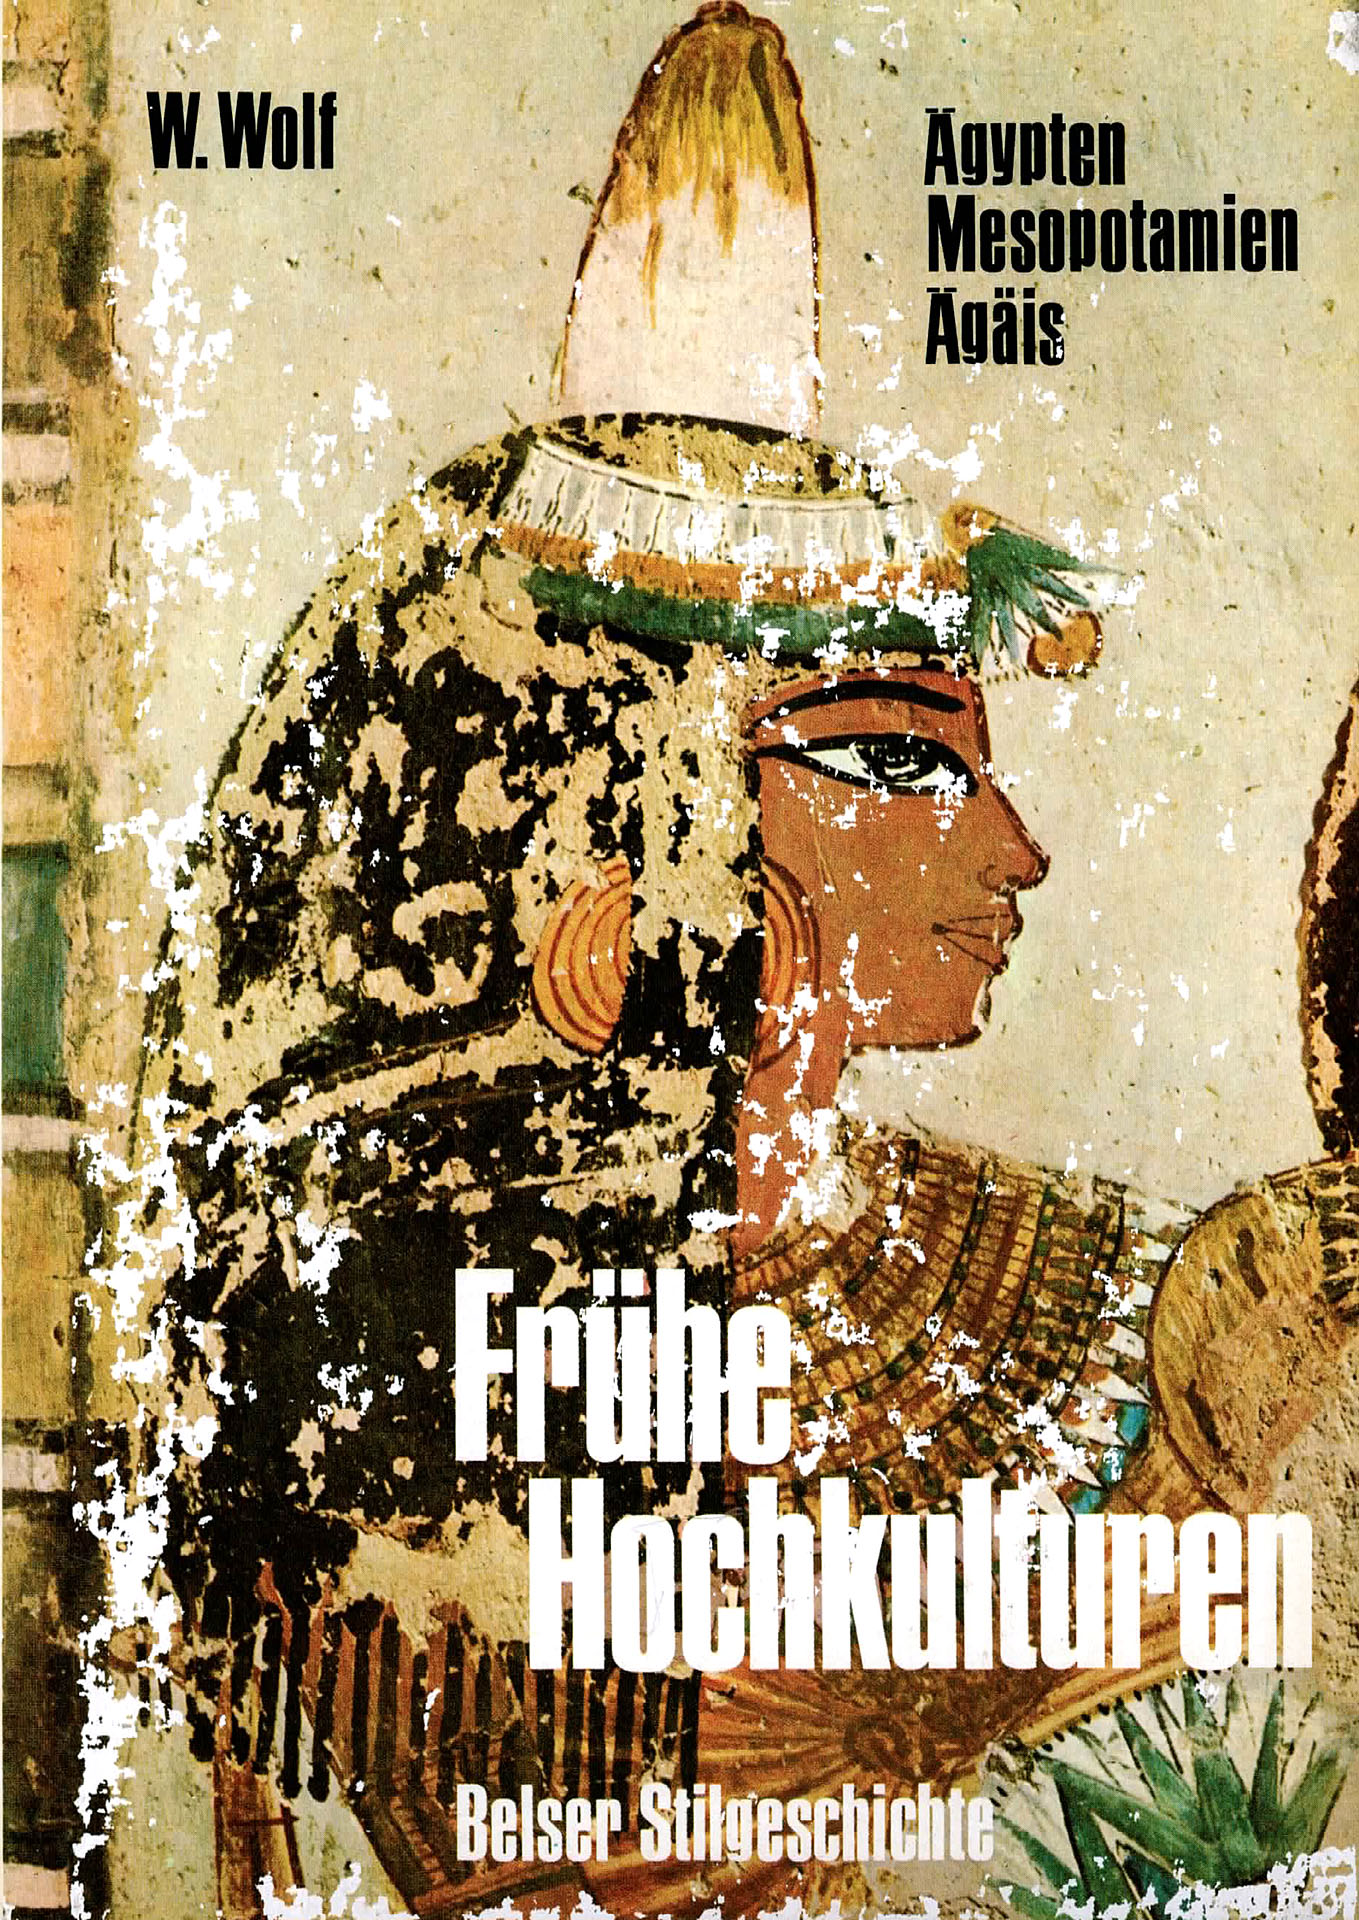 Belser Stilgeschichte Band 1 - Frühe Hochkulturen-Agypten, Mesopotamien, Ägäis - Wolf, Walther